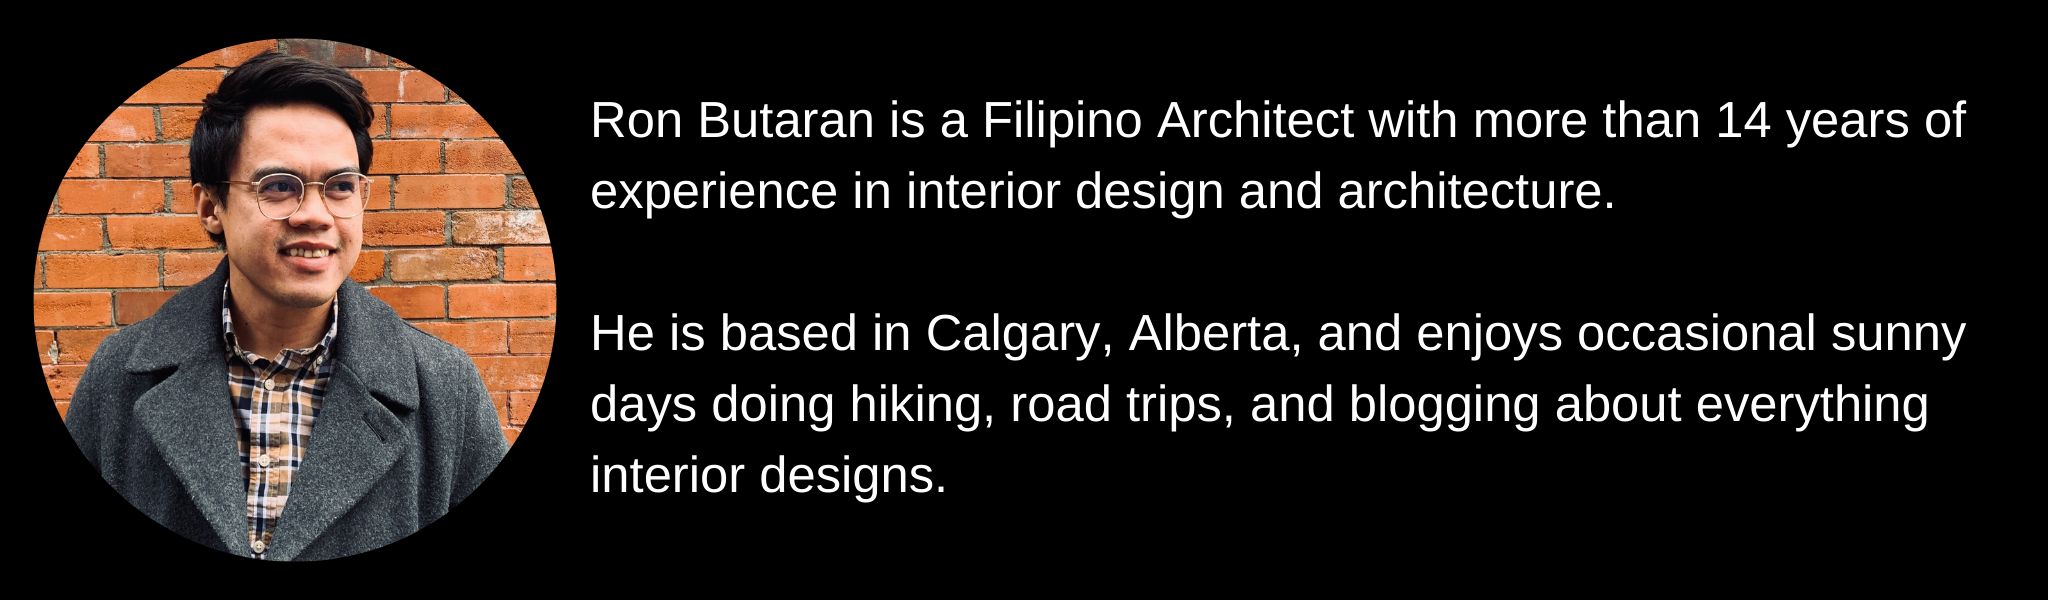 ron butaran architect, interior designer and blogger 